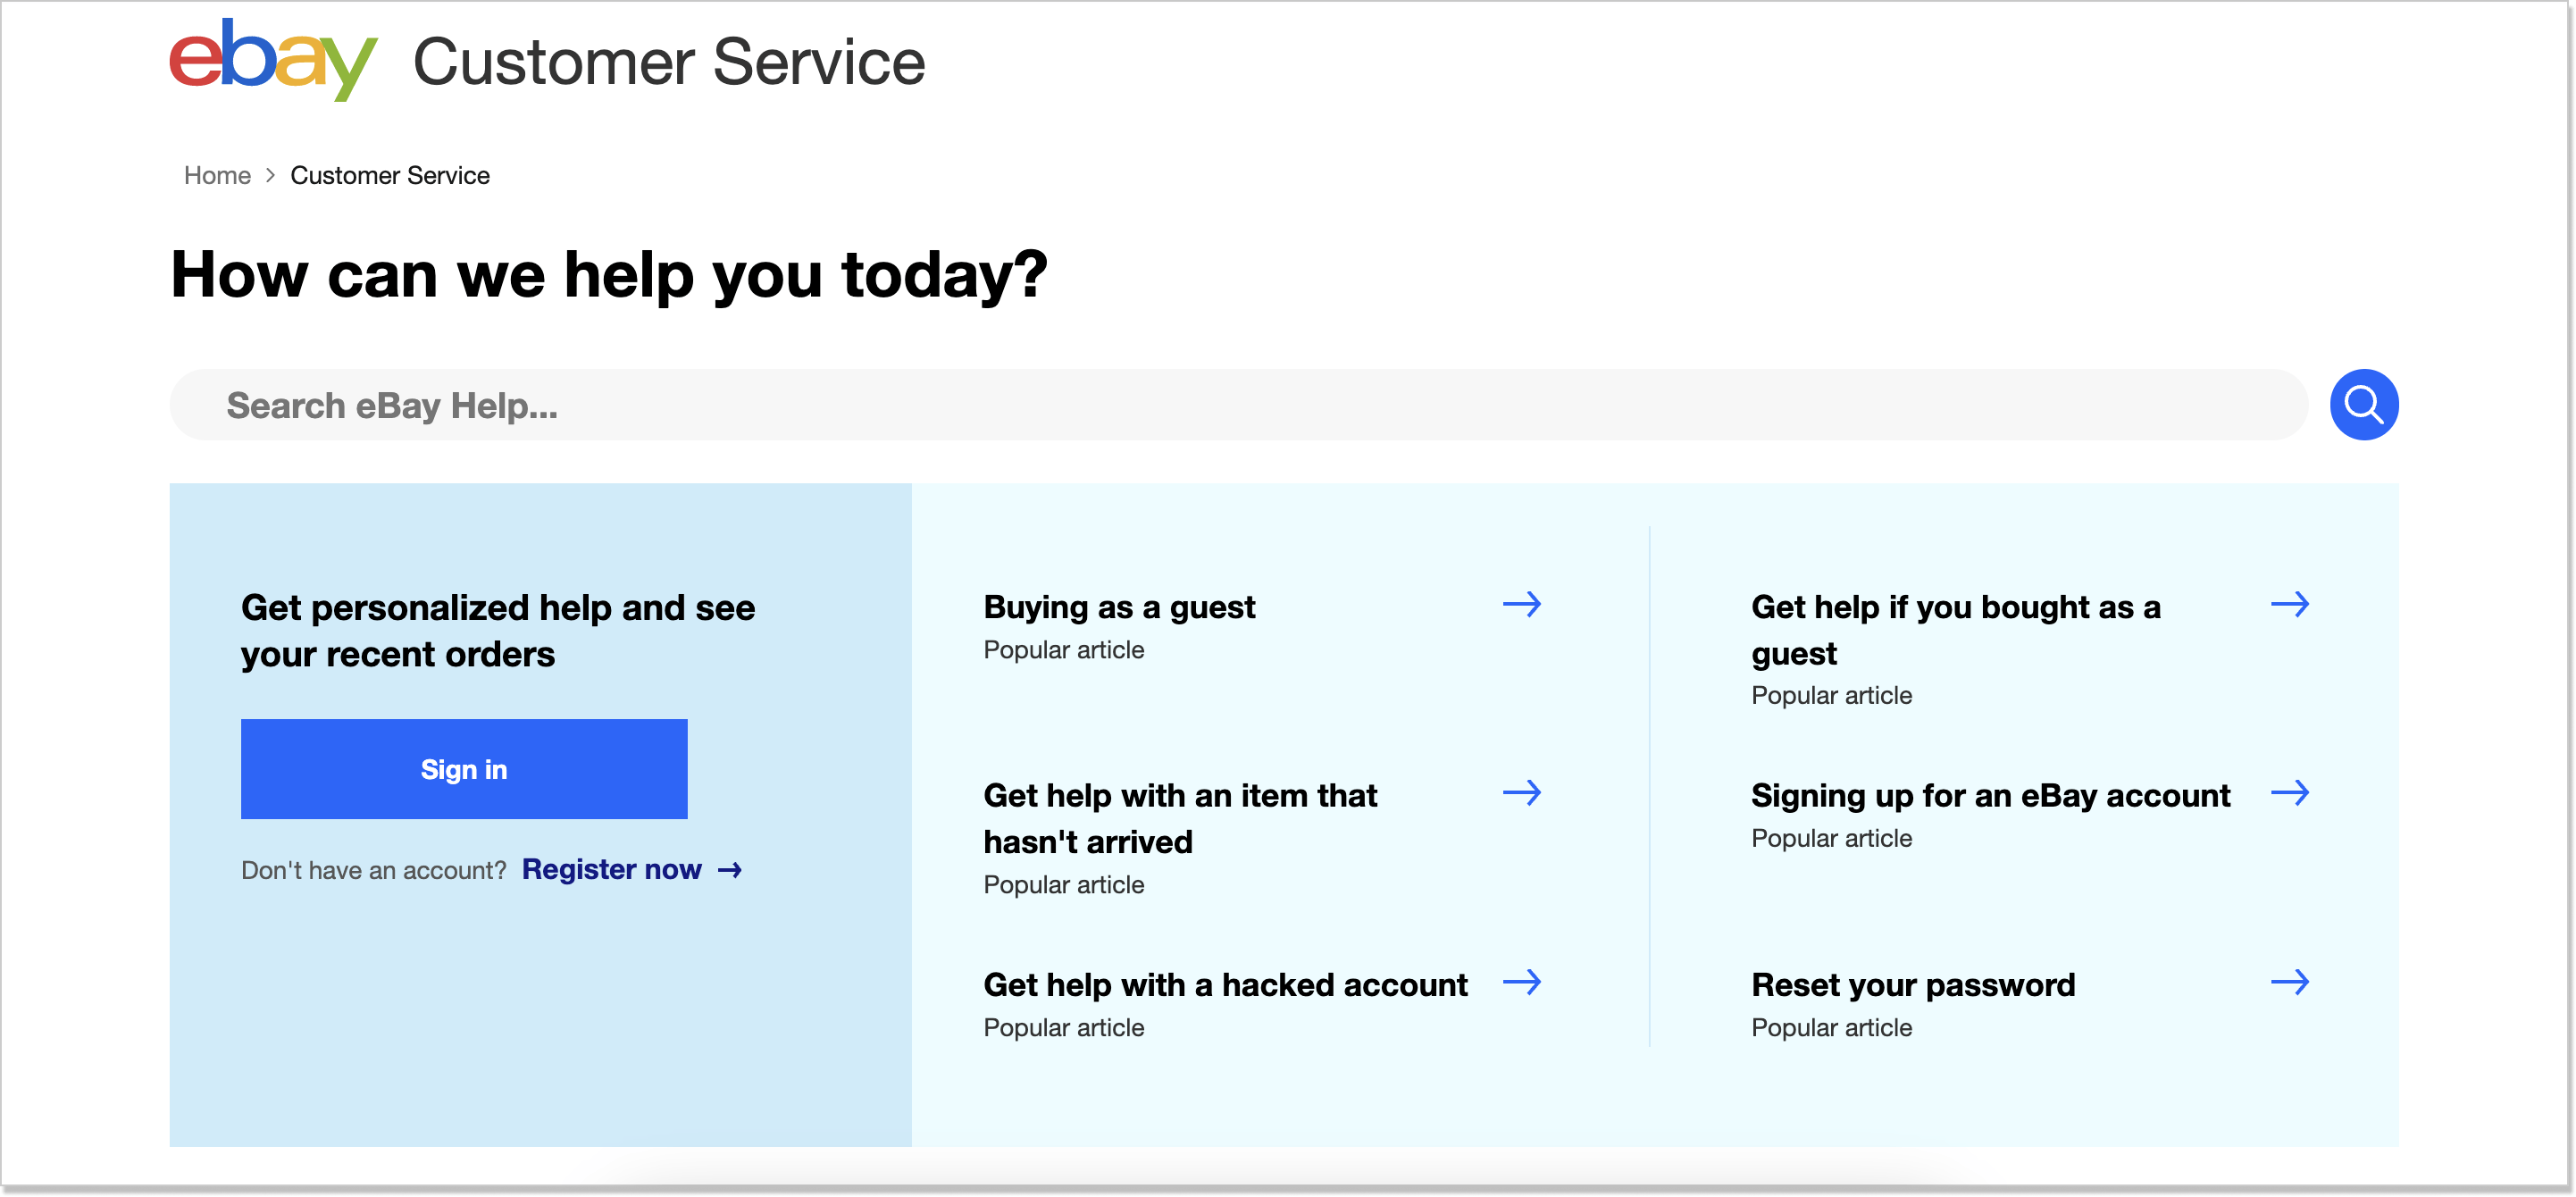 ebay customer service knowledge base